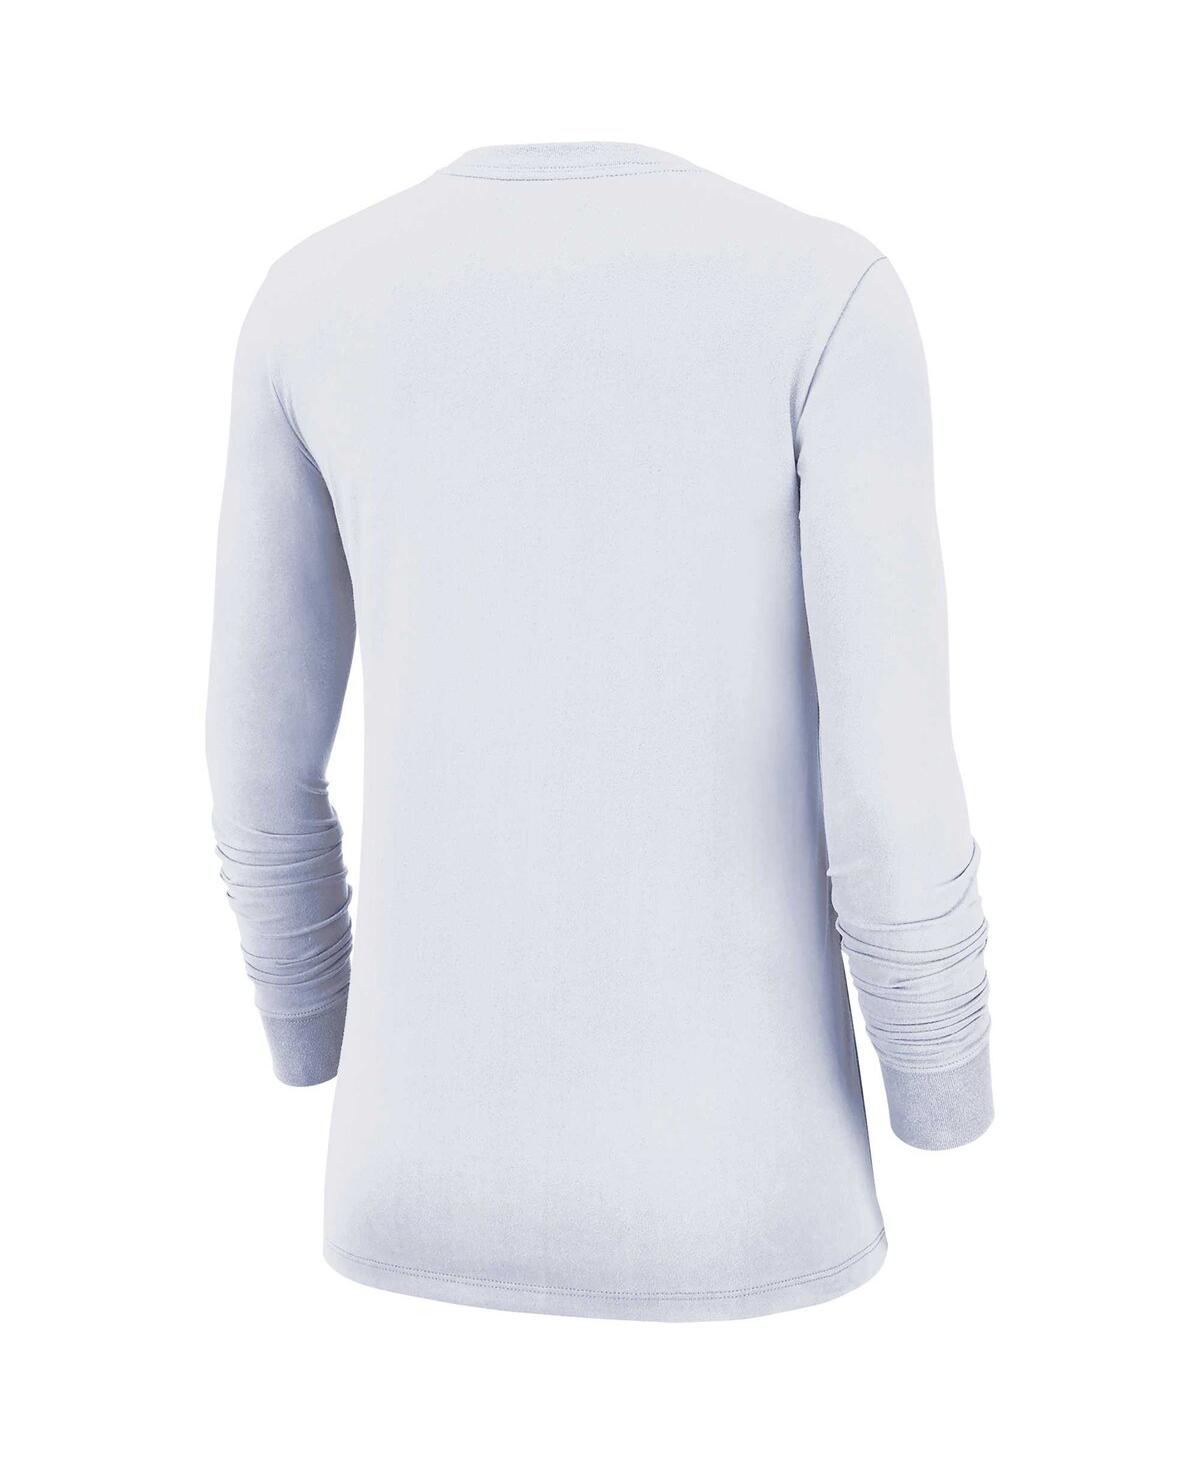 Shop Nike Women's  White Team Usa Core Long Sleeve T-shirt